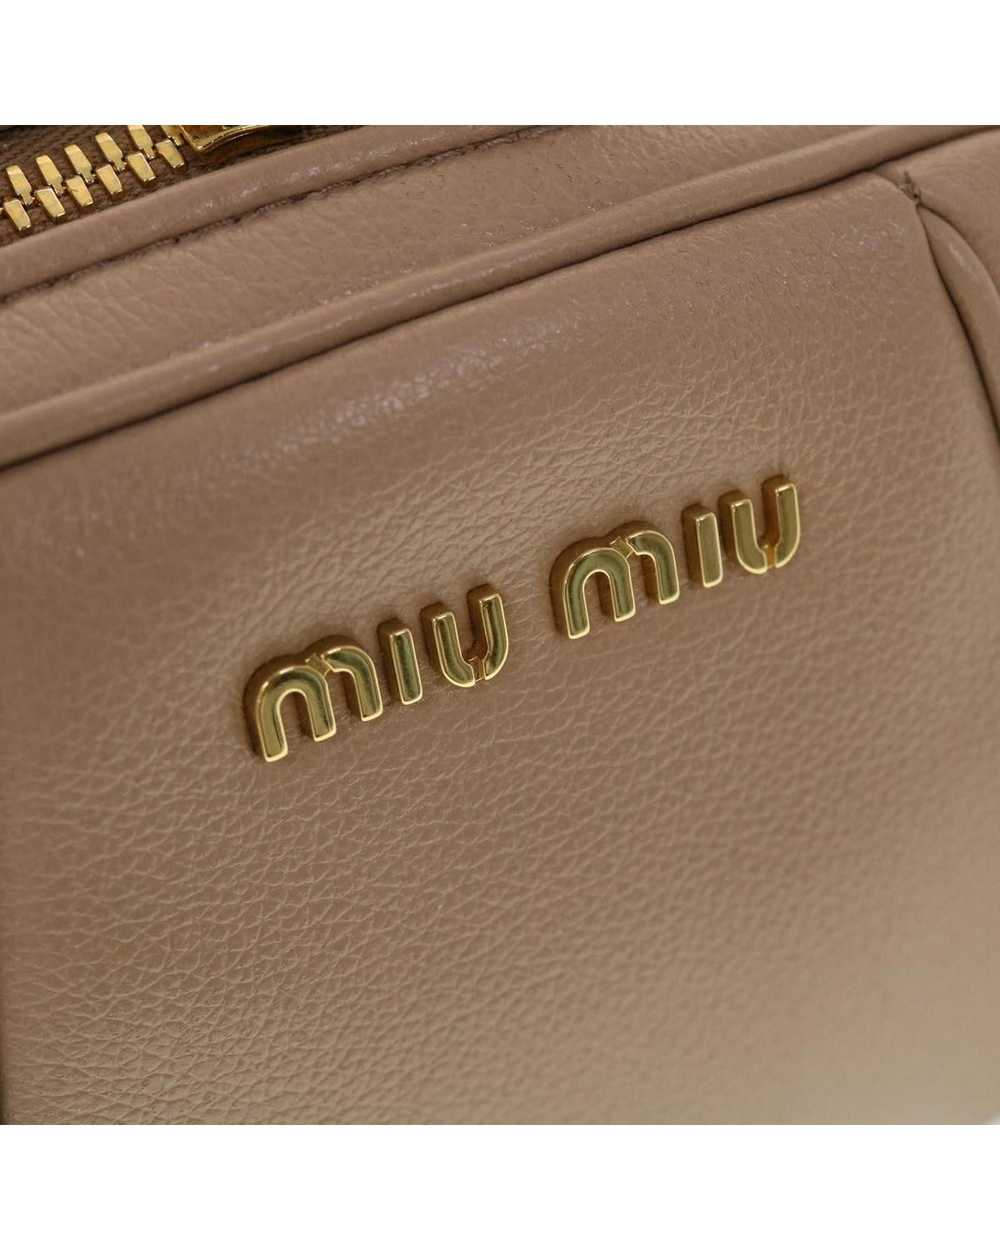 Miu Miu Chain Shoulder Bag Leather Beige Pink - image 9